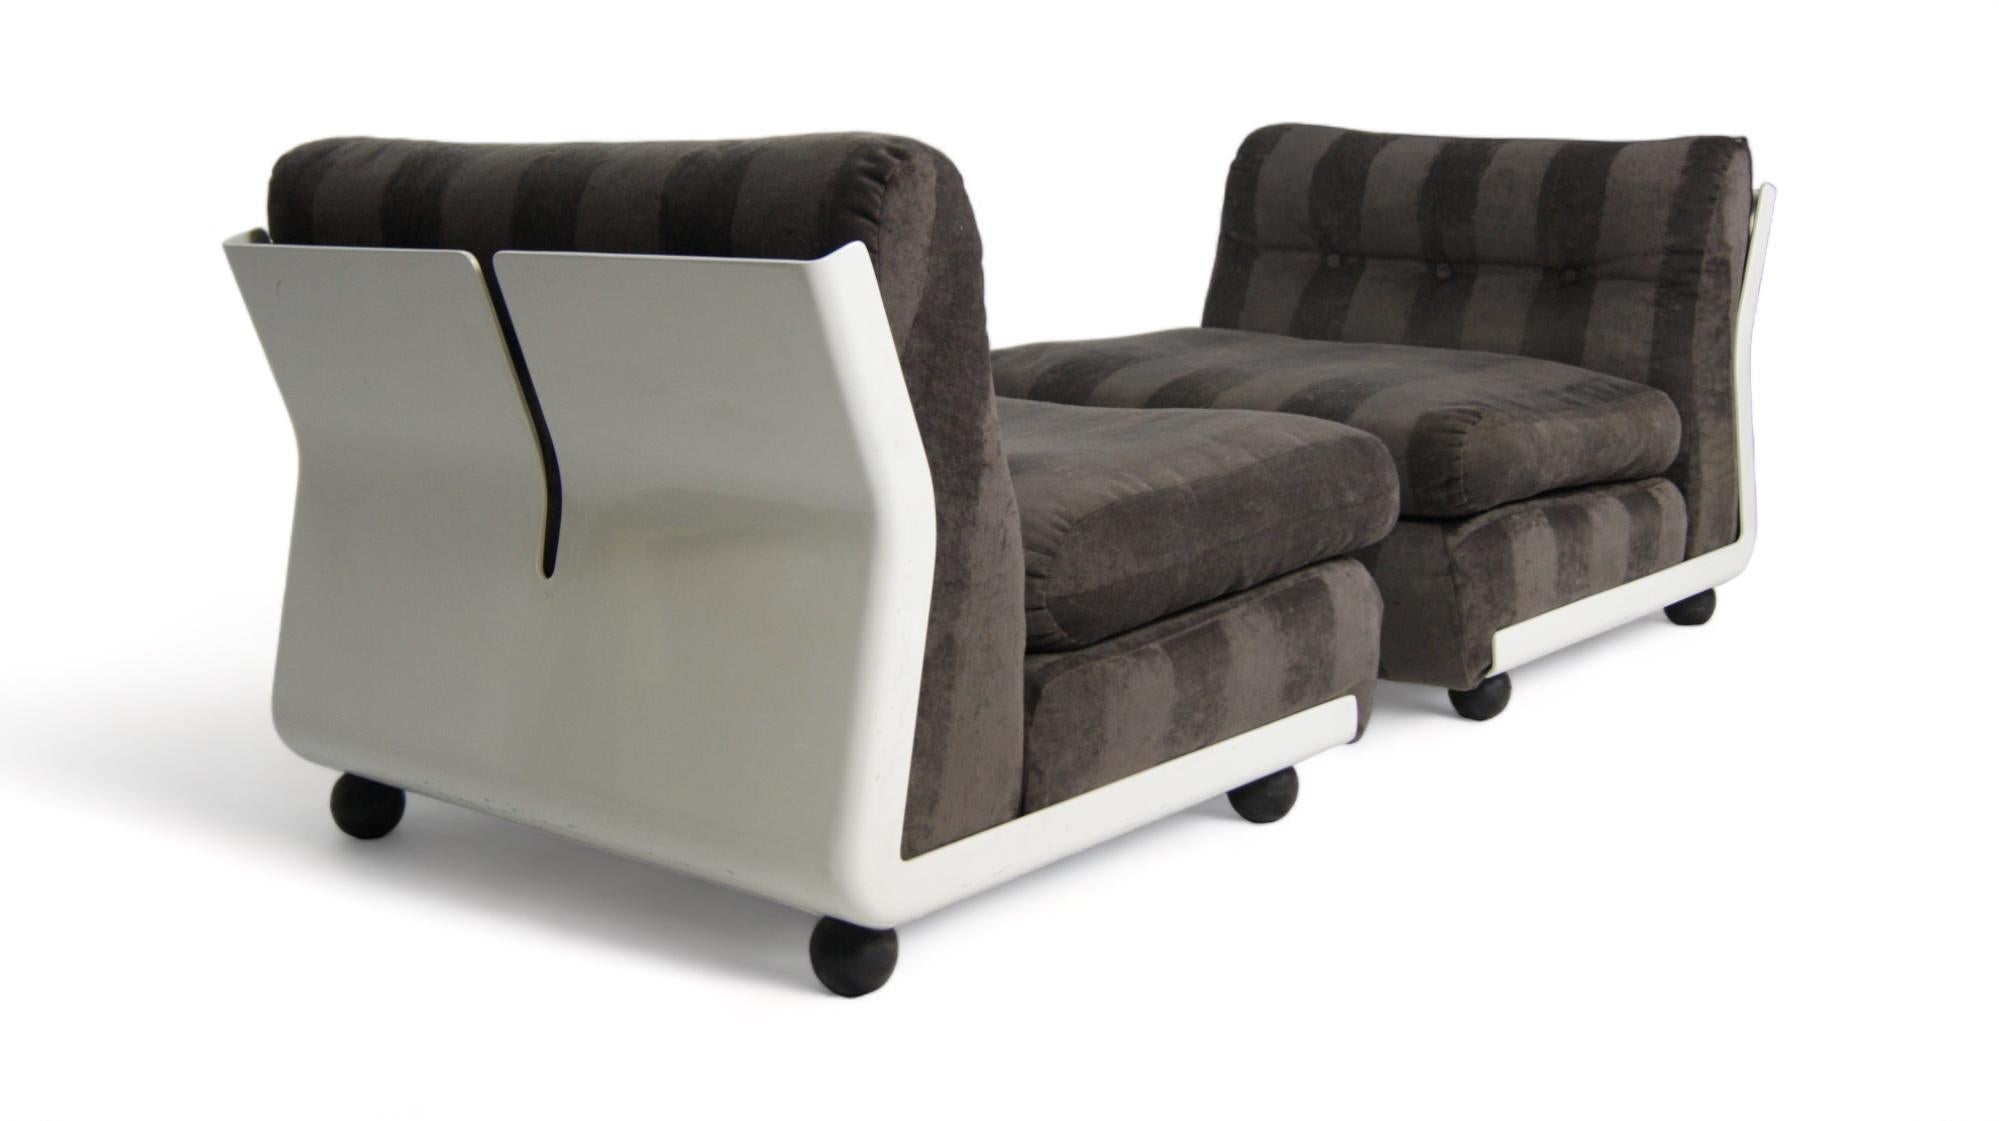 Fabric B&B Italia Mario Bellini Amanta Italian design modular sofa in dark fabric For Sale